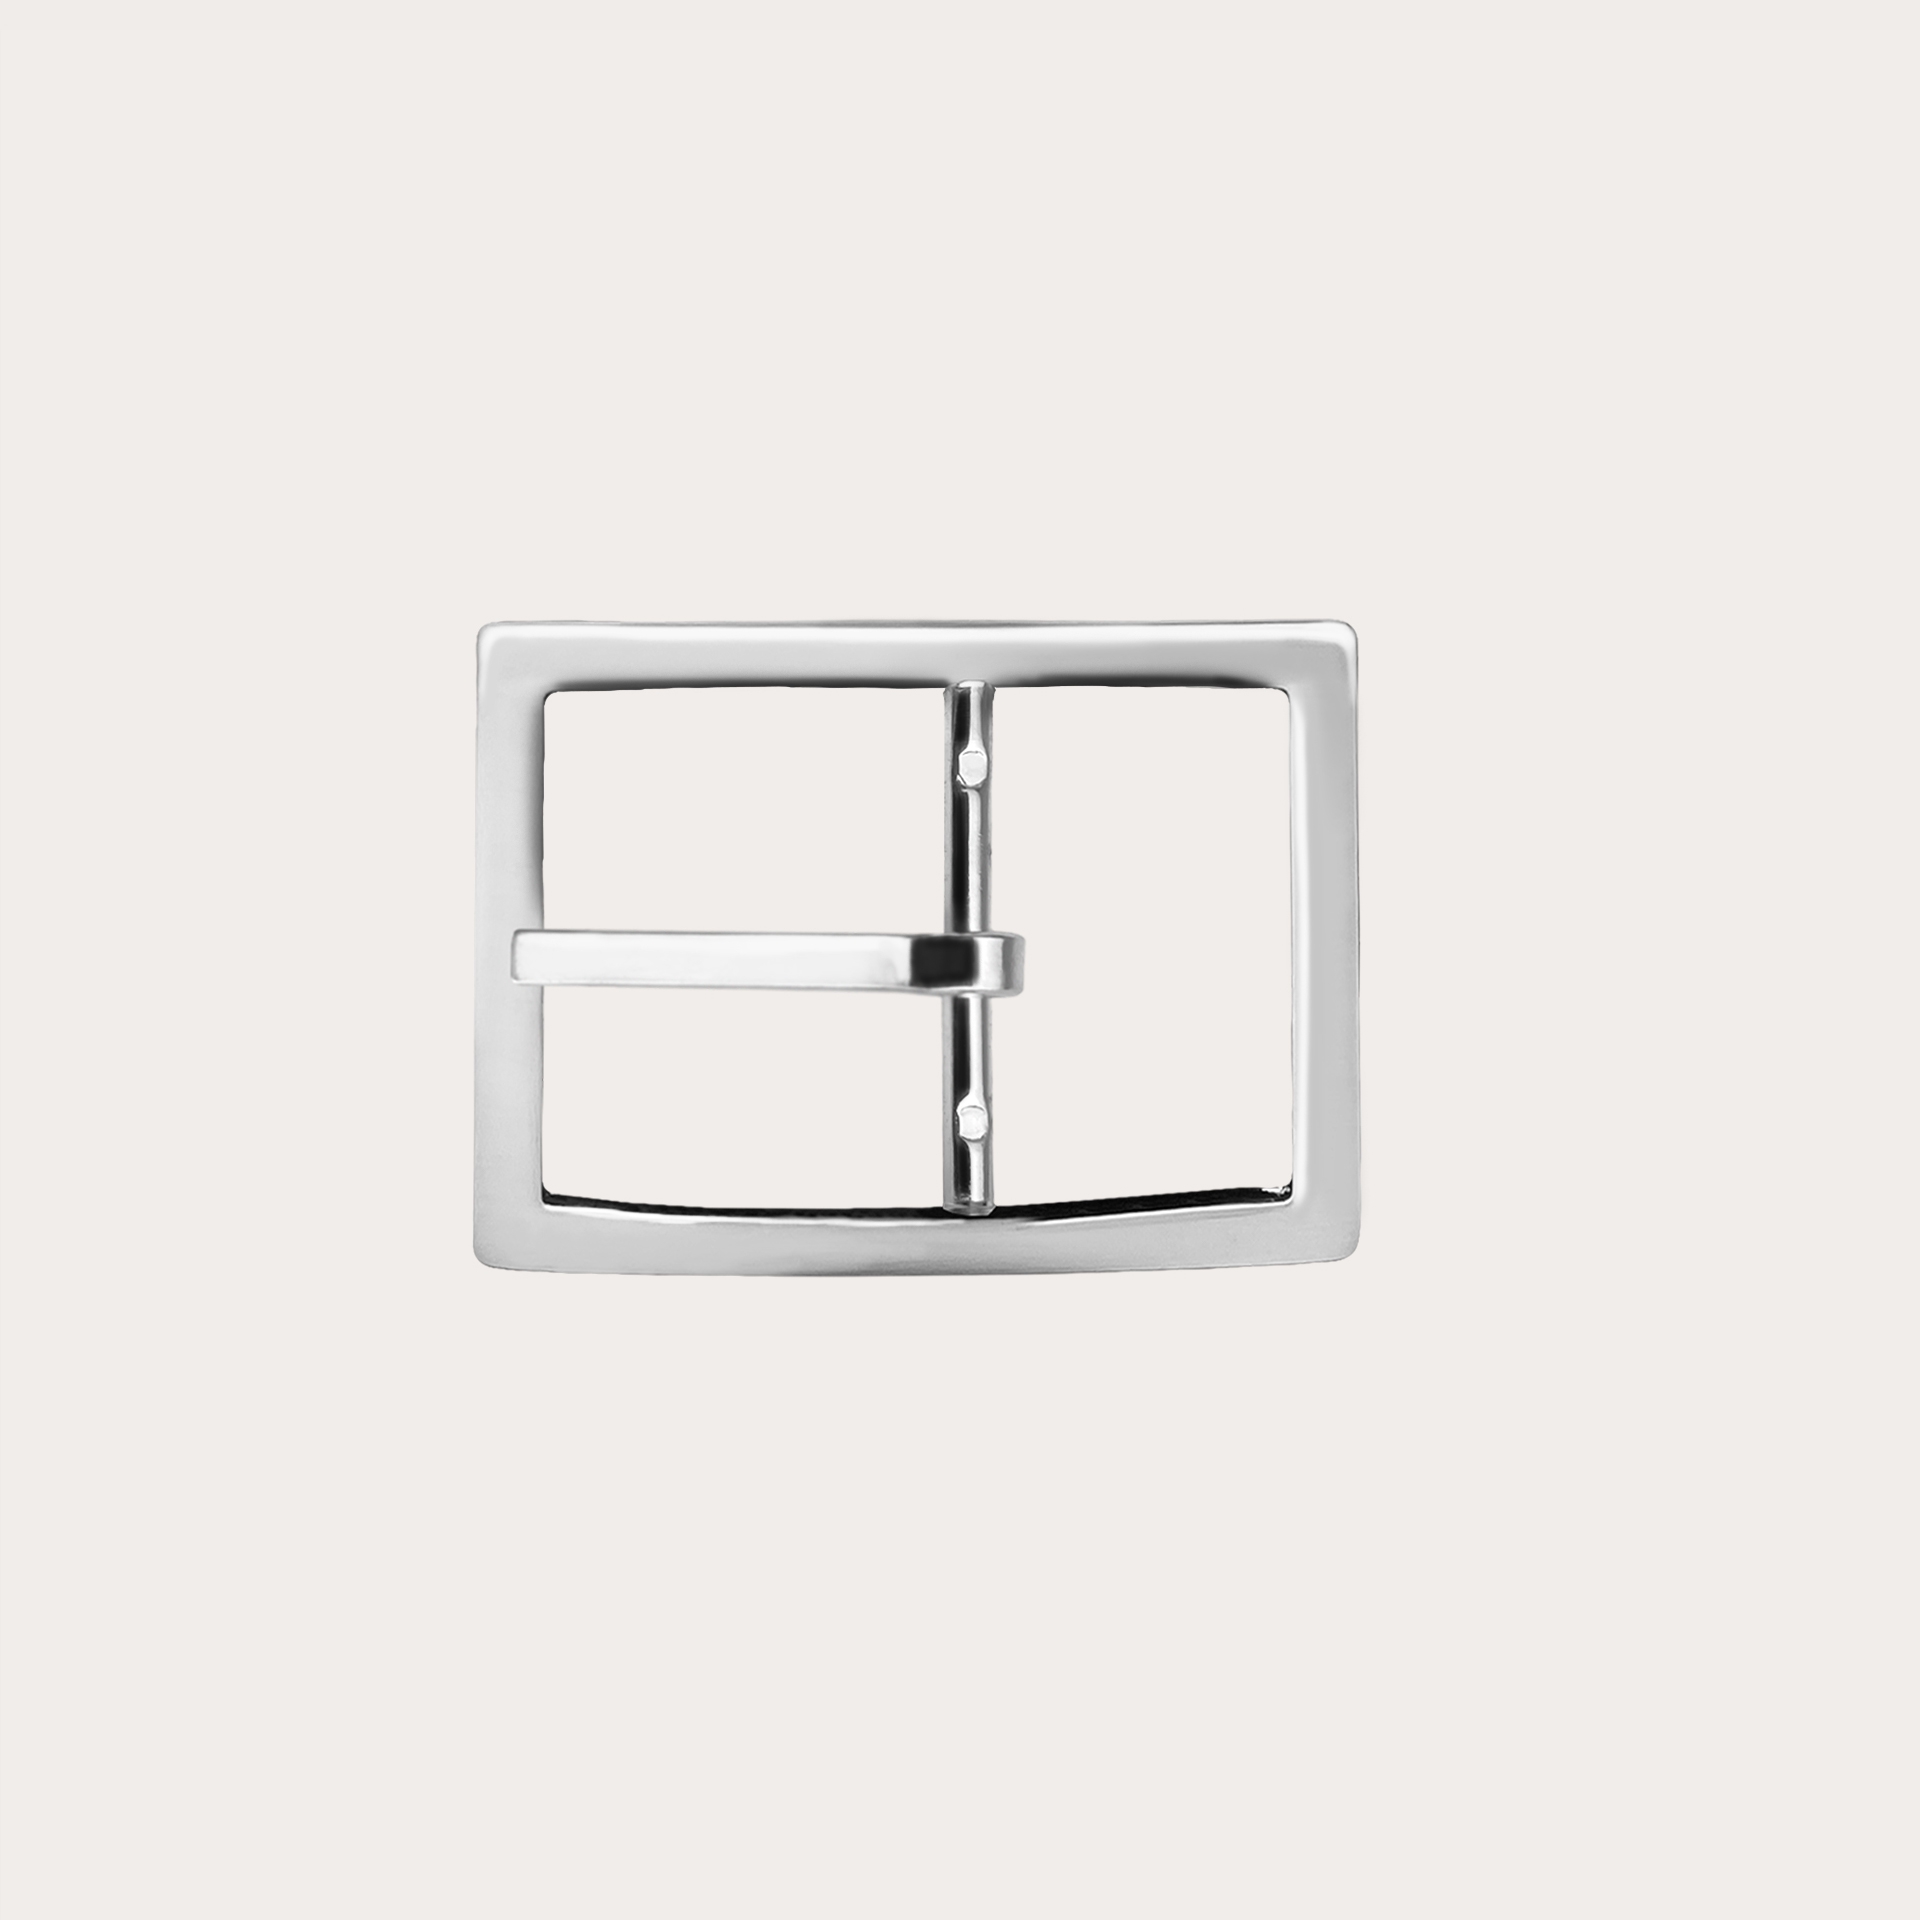 BRUCLE Fibbia doppia reversibile nichel free 30mm, color argento lucido